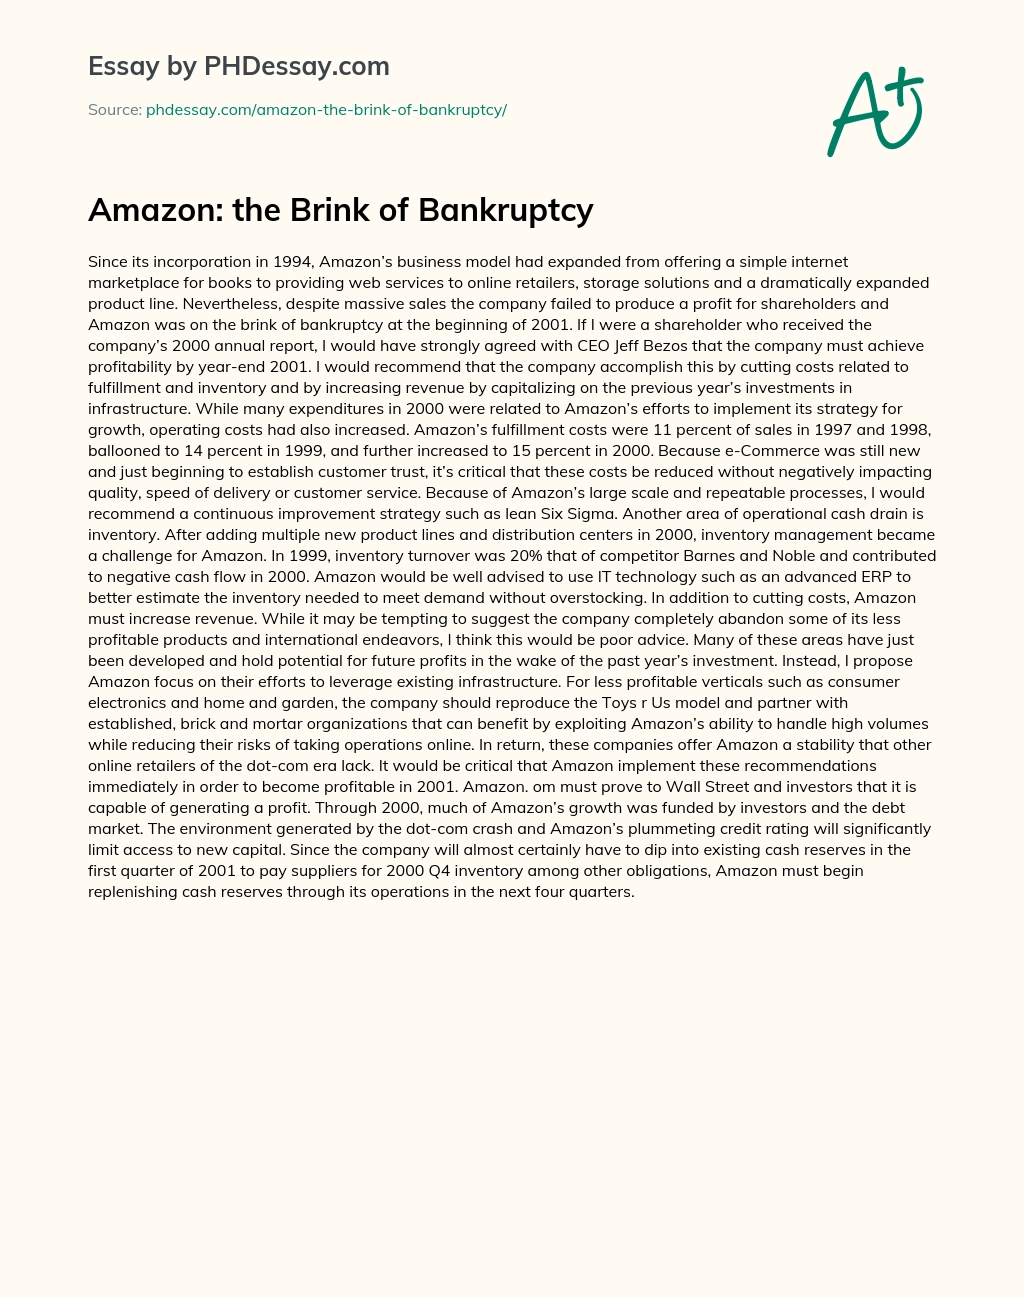 Amazon: the Brink of Bankruptcy essay